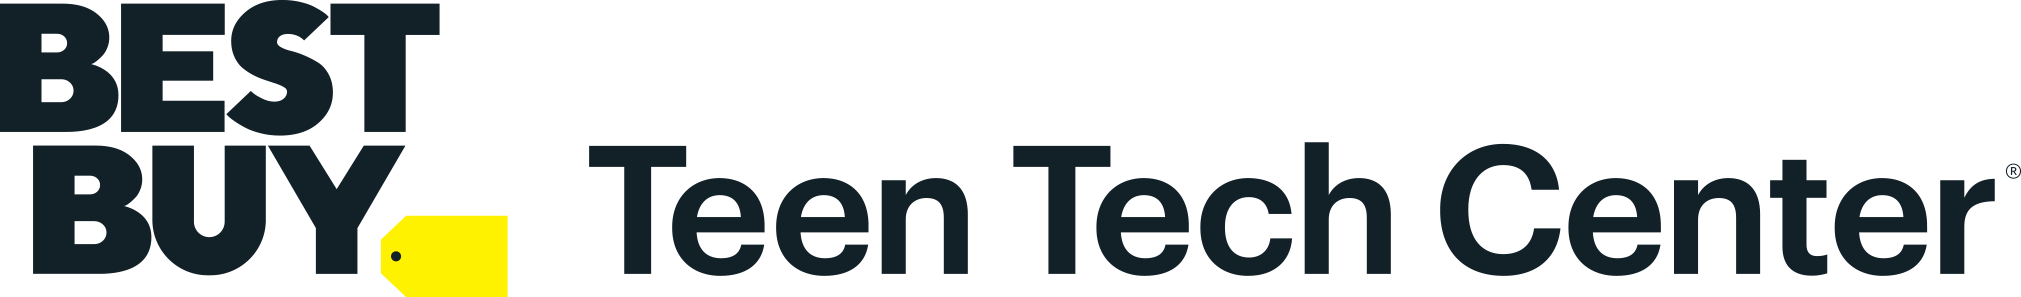 Bby Teentechcenter Lockup Logo H Rgb